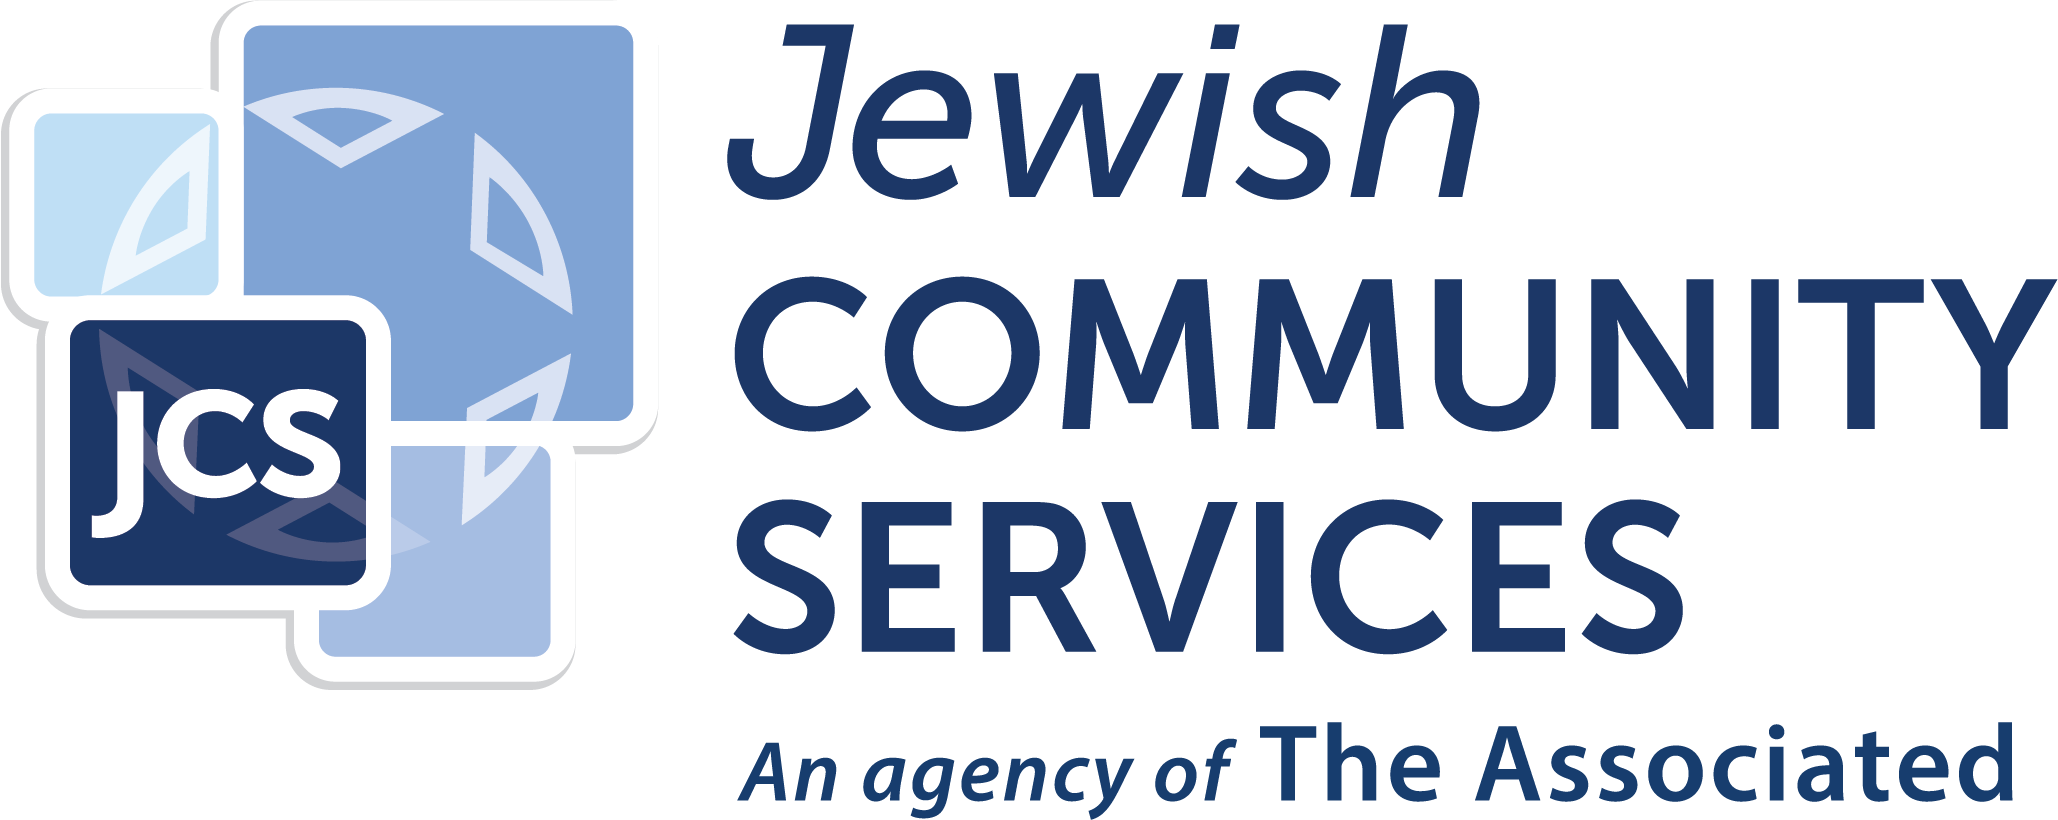 Jewish Community Services logo